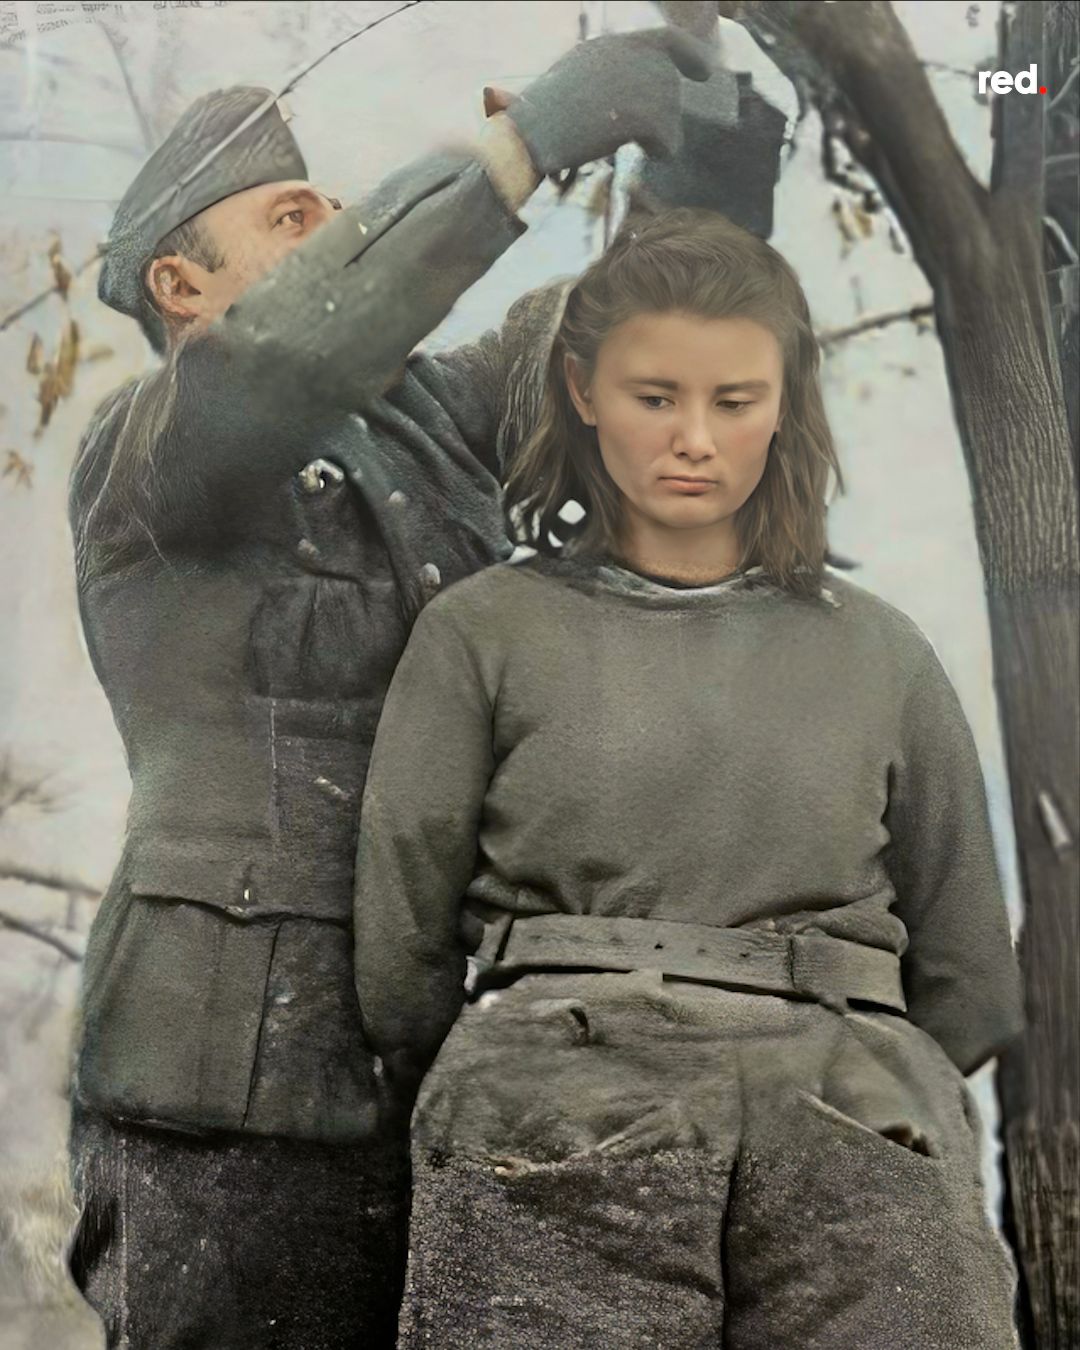 8 febbraio 1943 i nazisti impiccano la partigiana 17enne jugoslava Lepa Radić